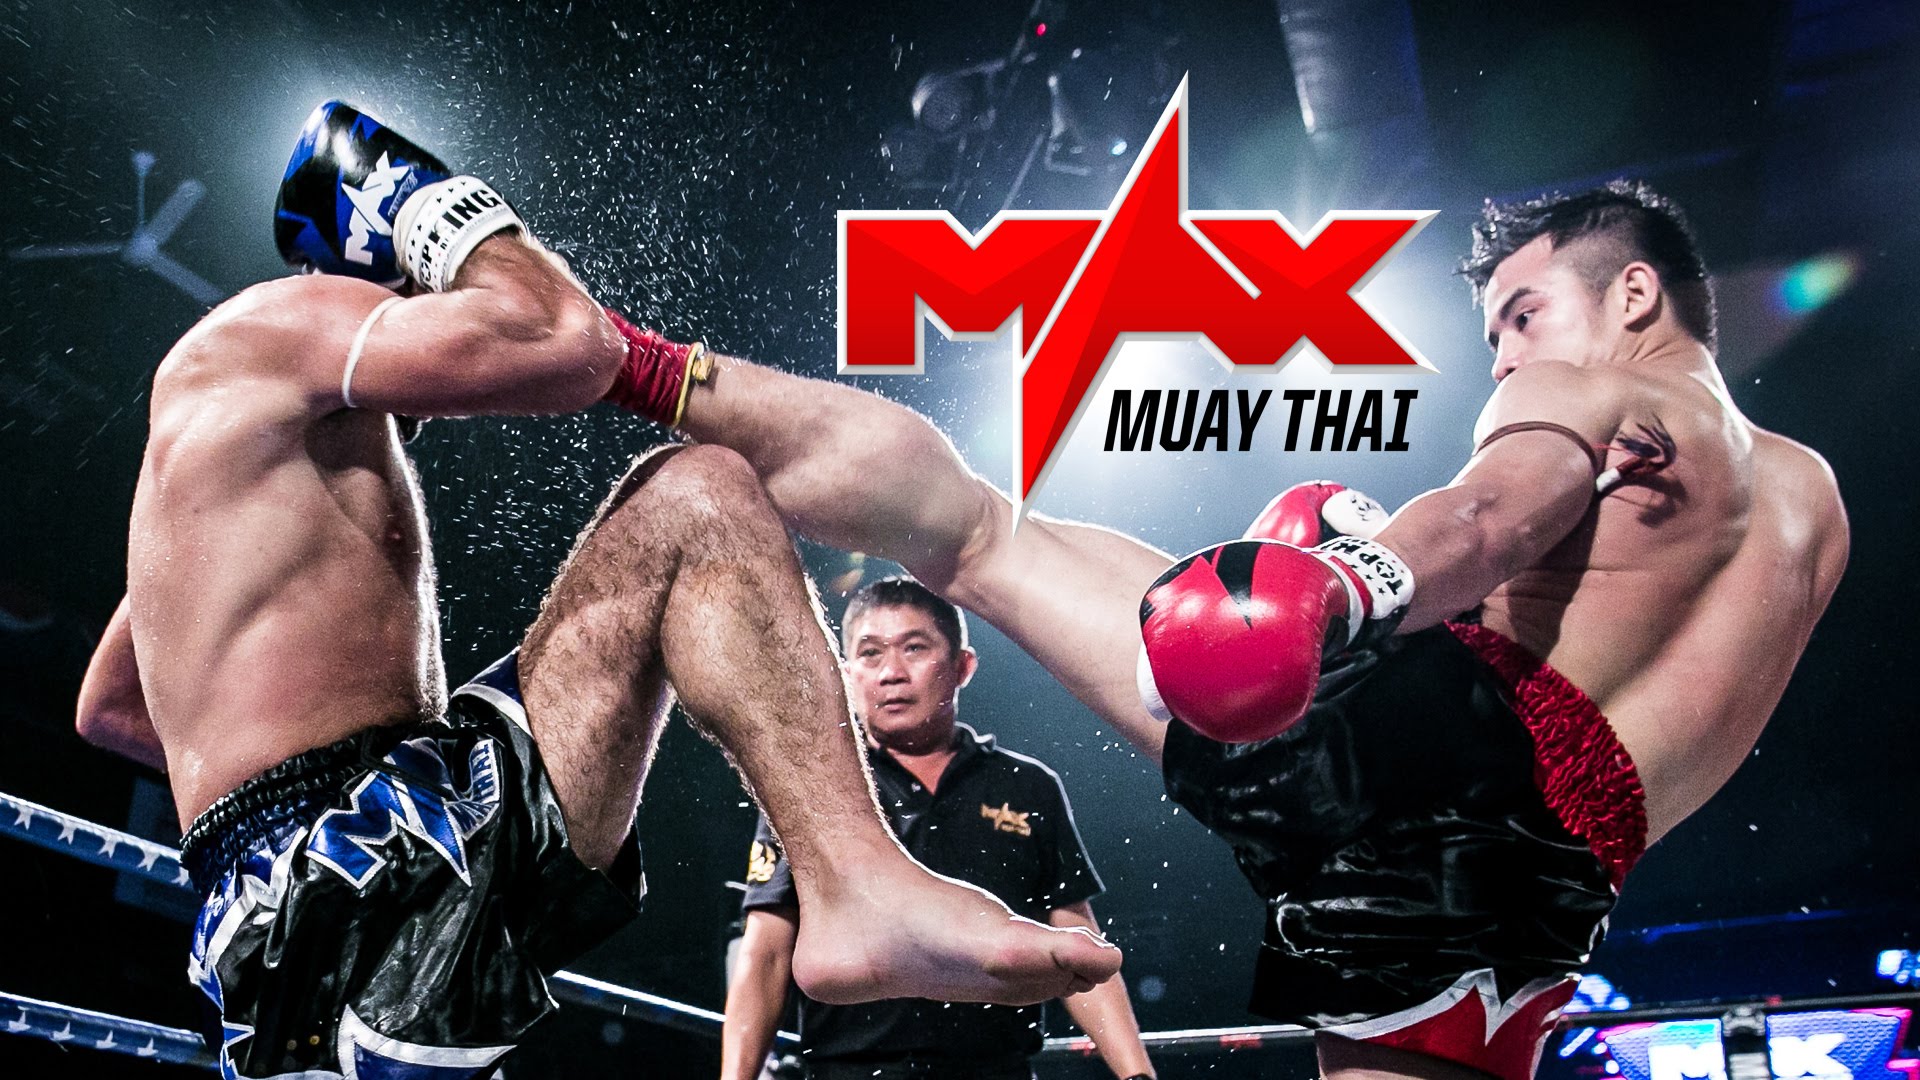 Max Muay Thai Stadium Pattaya - A World-Class Muay Thai - YouTube